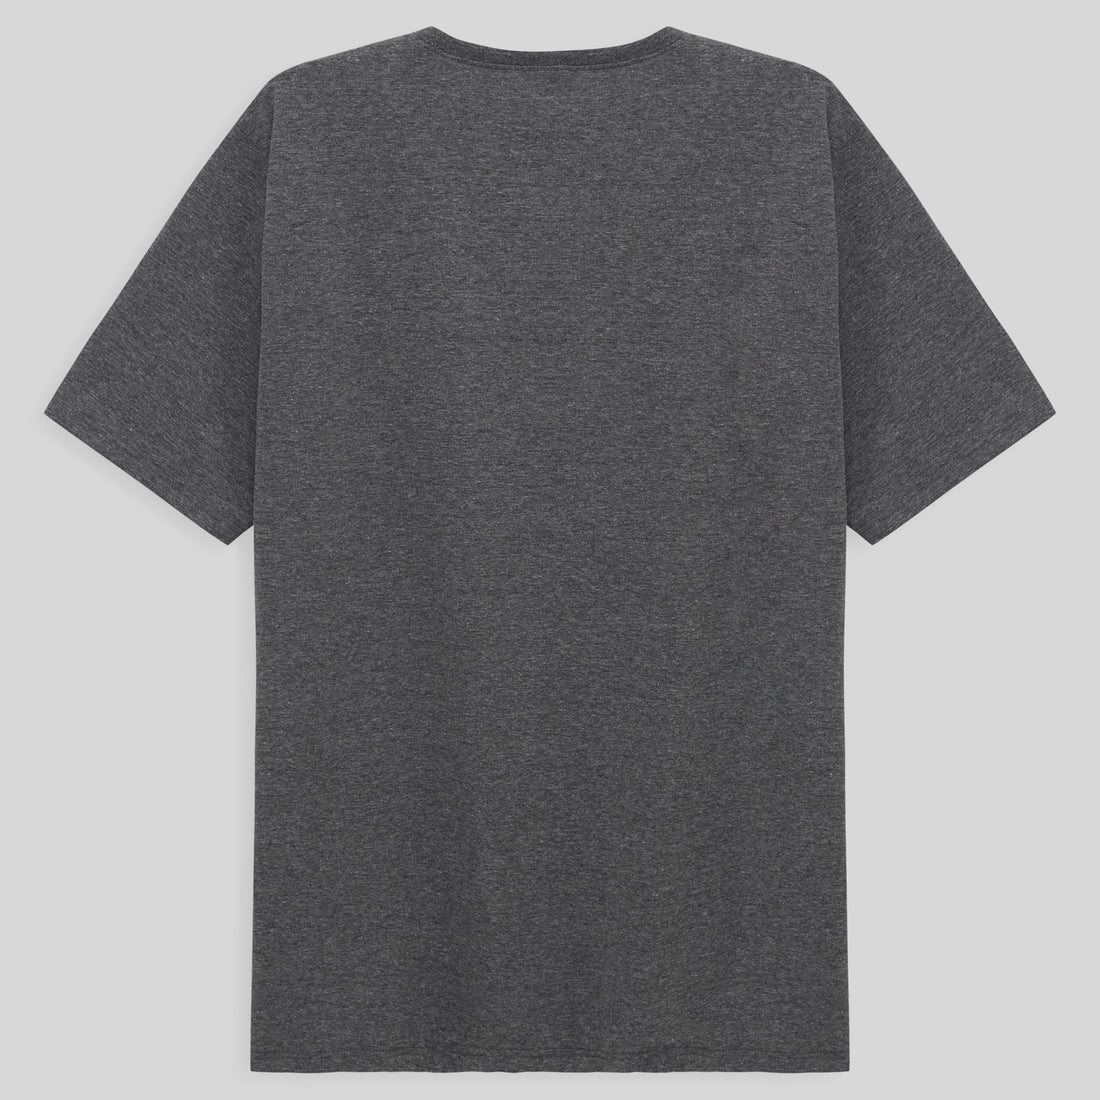 Tech T-Shirt Anti Odor Gola C Plus Size Masculina - Mescla Escuro